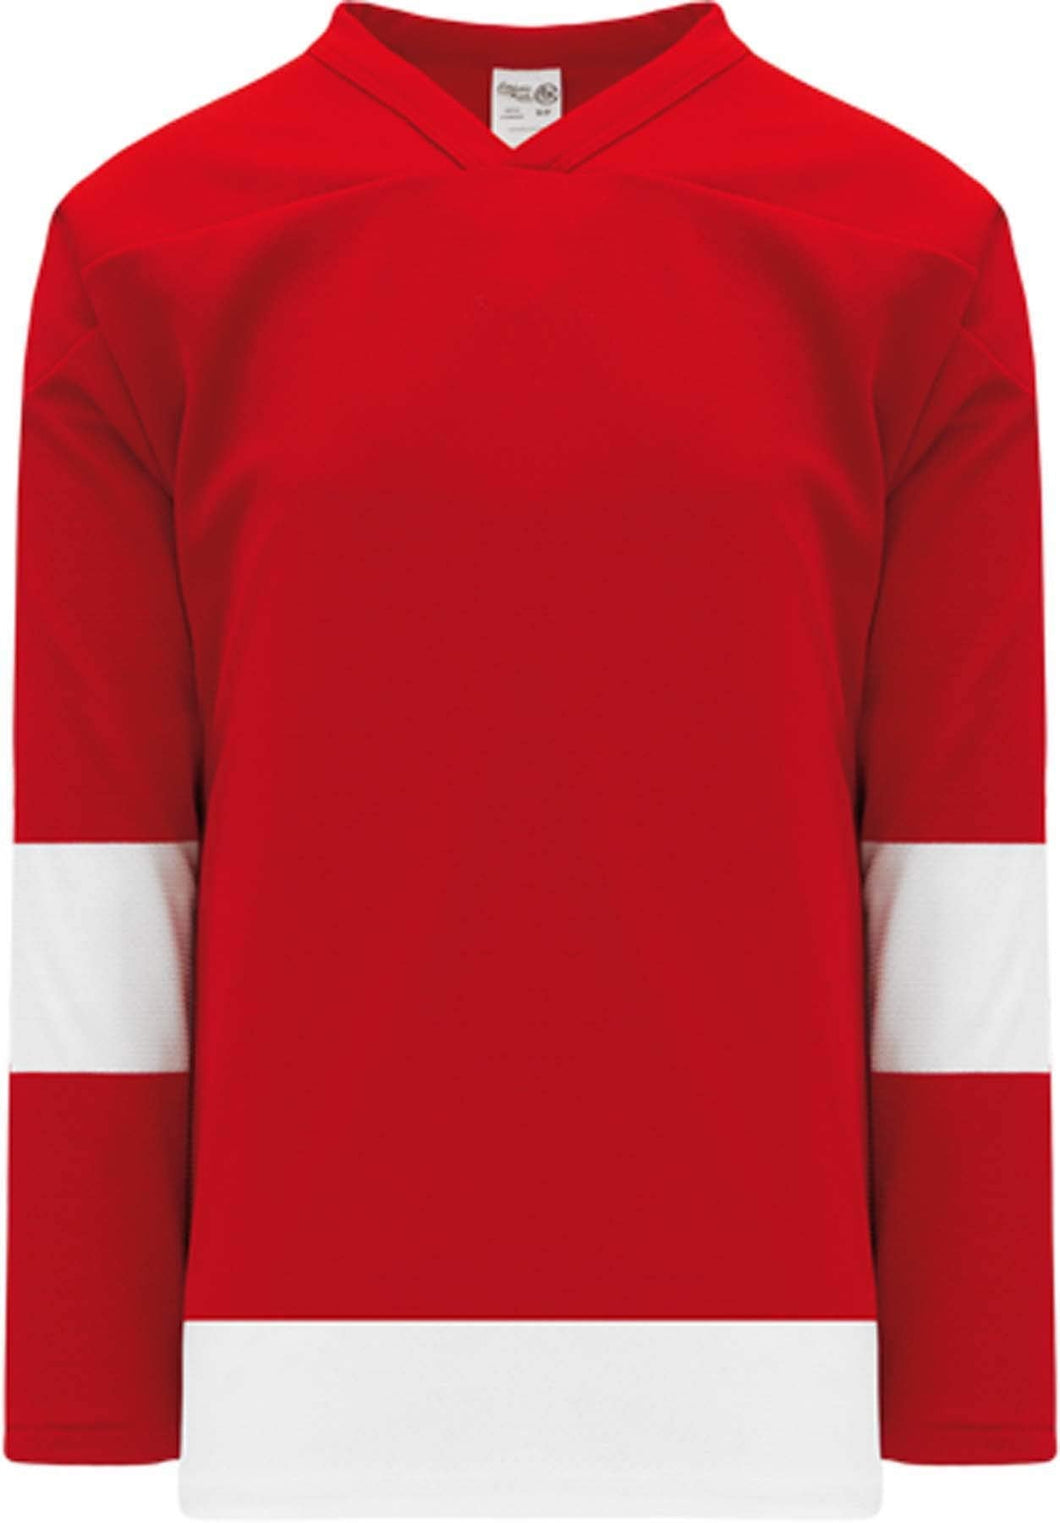 Custom or blank Wholesale Detroit RED Sleeve Stripes Pro Plain Blank Hockey Jerseys